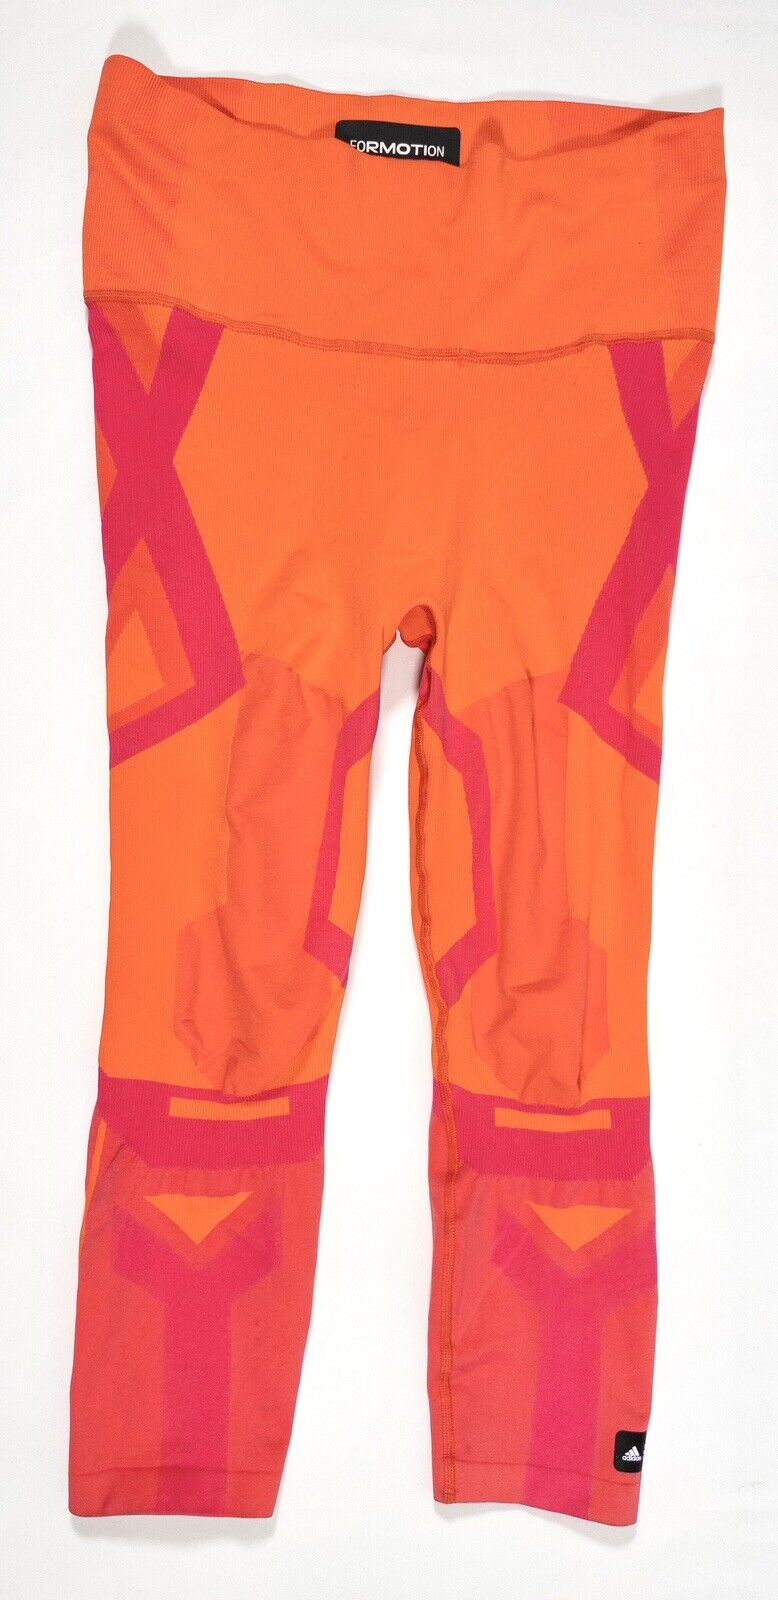 ADIDAS Women's Formotion Sculpt Leggings Training Orange Pink Size UK 32-34